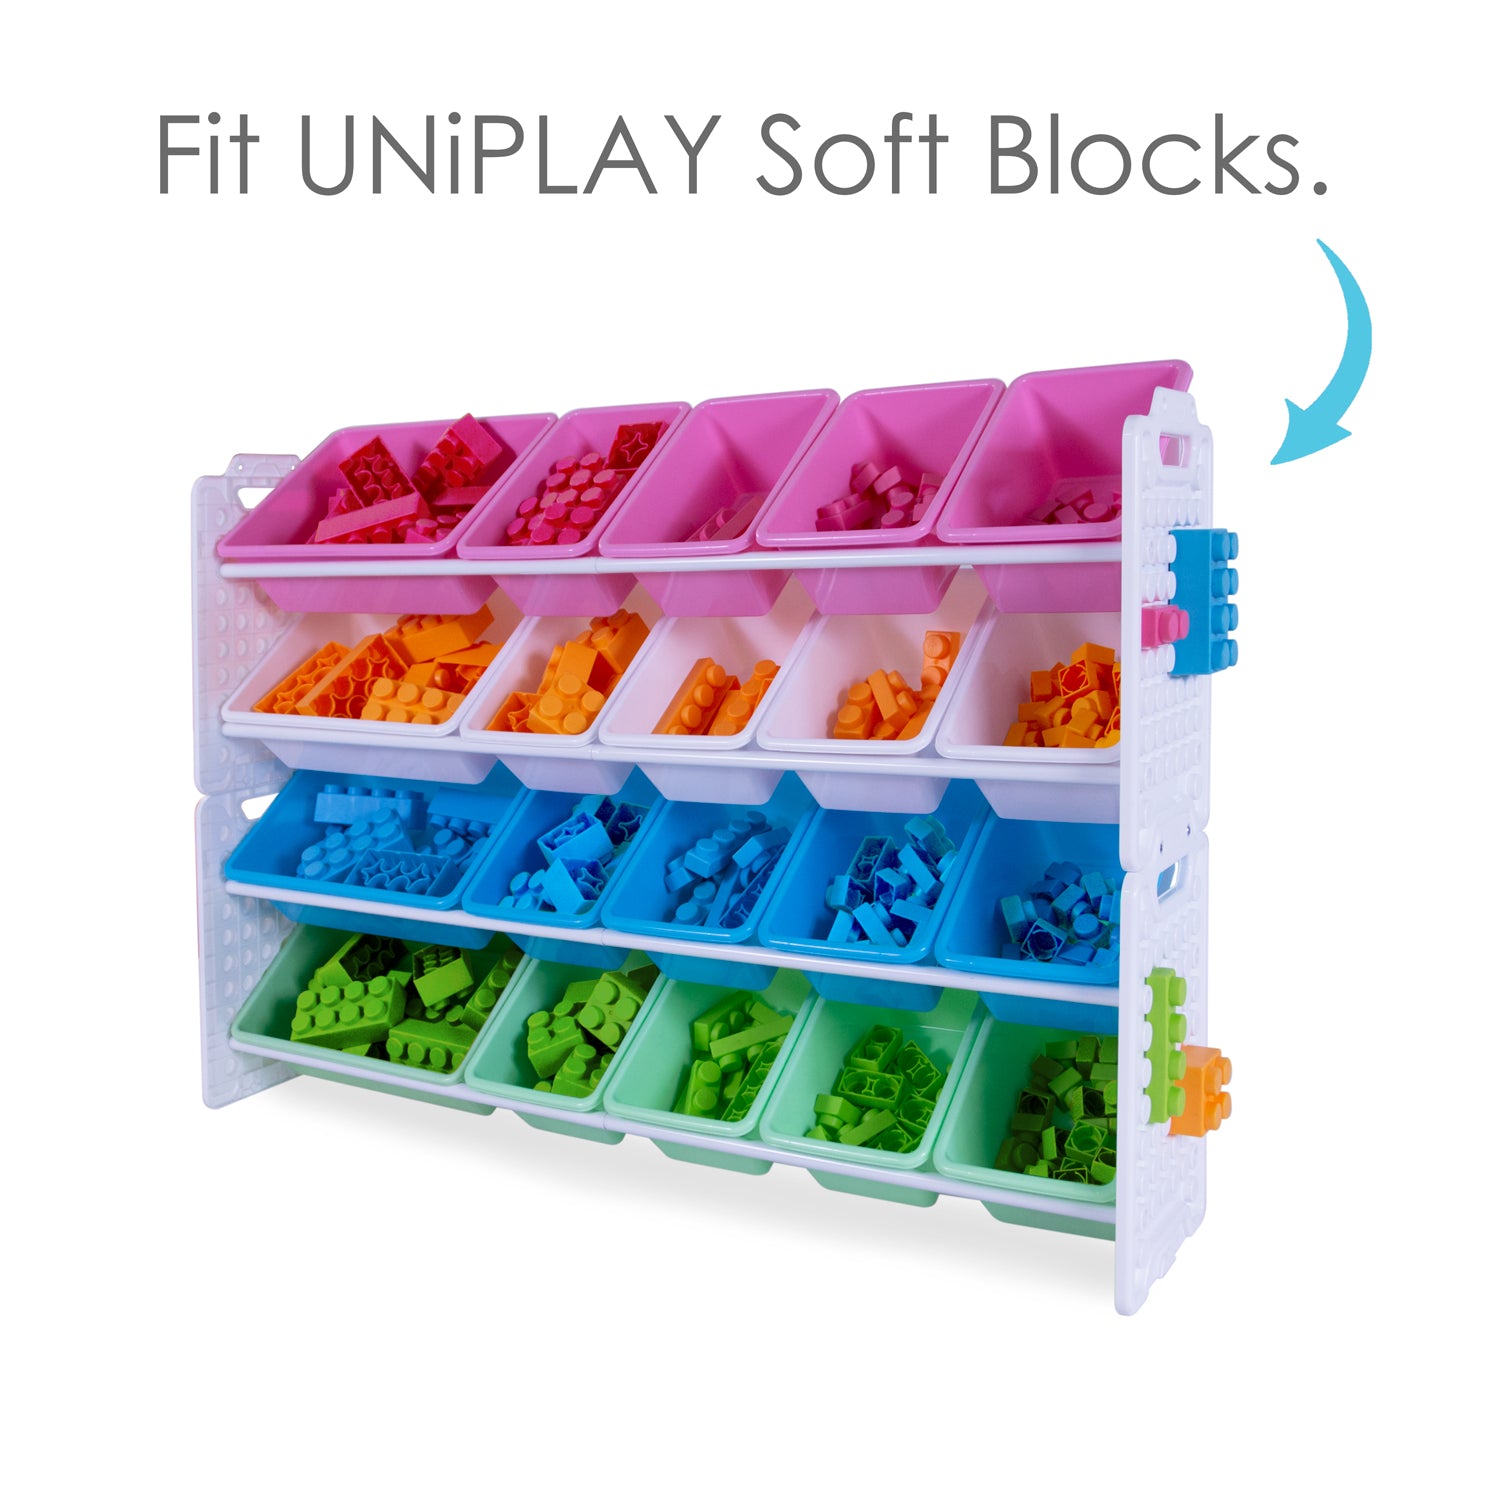 UNiPLAY 20 Bins Toy Storage Organizer - Pink (UB45831)